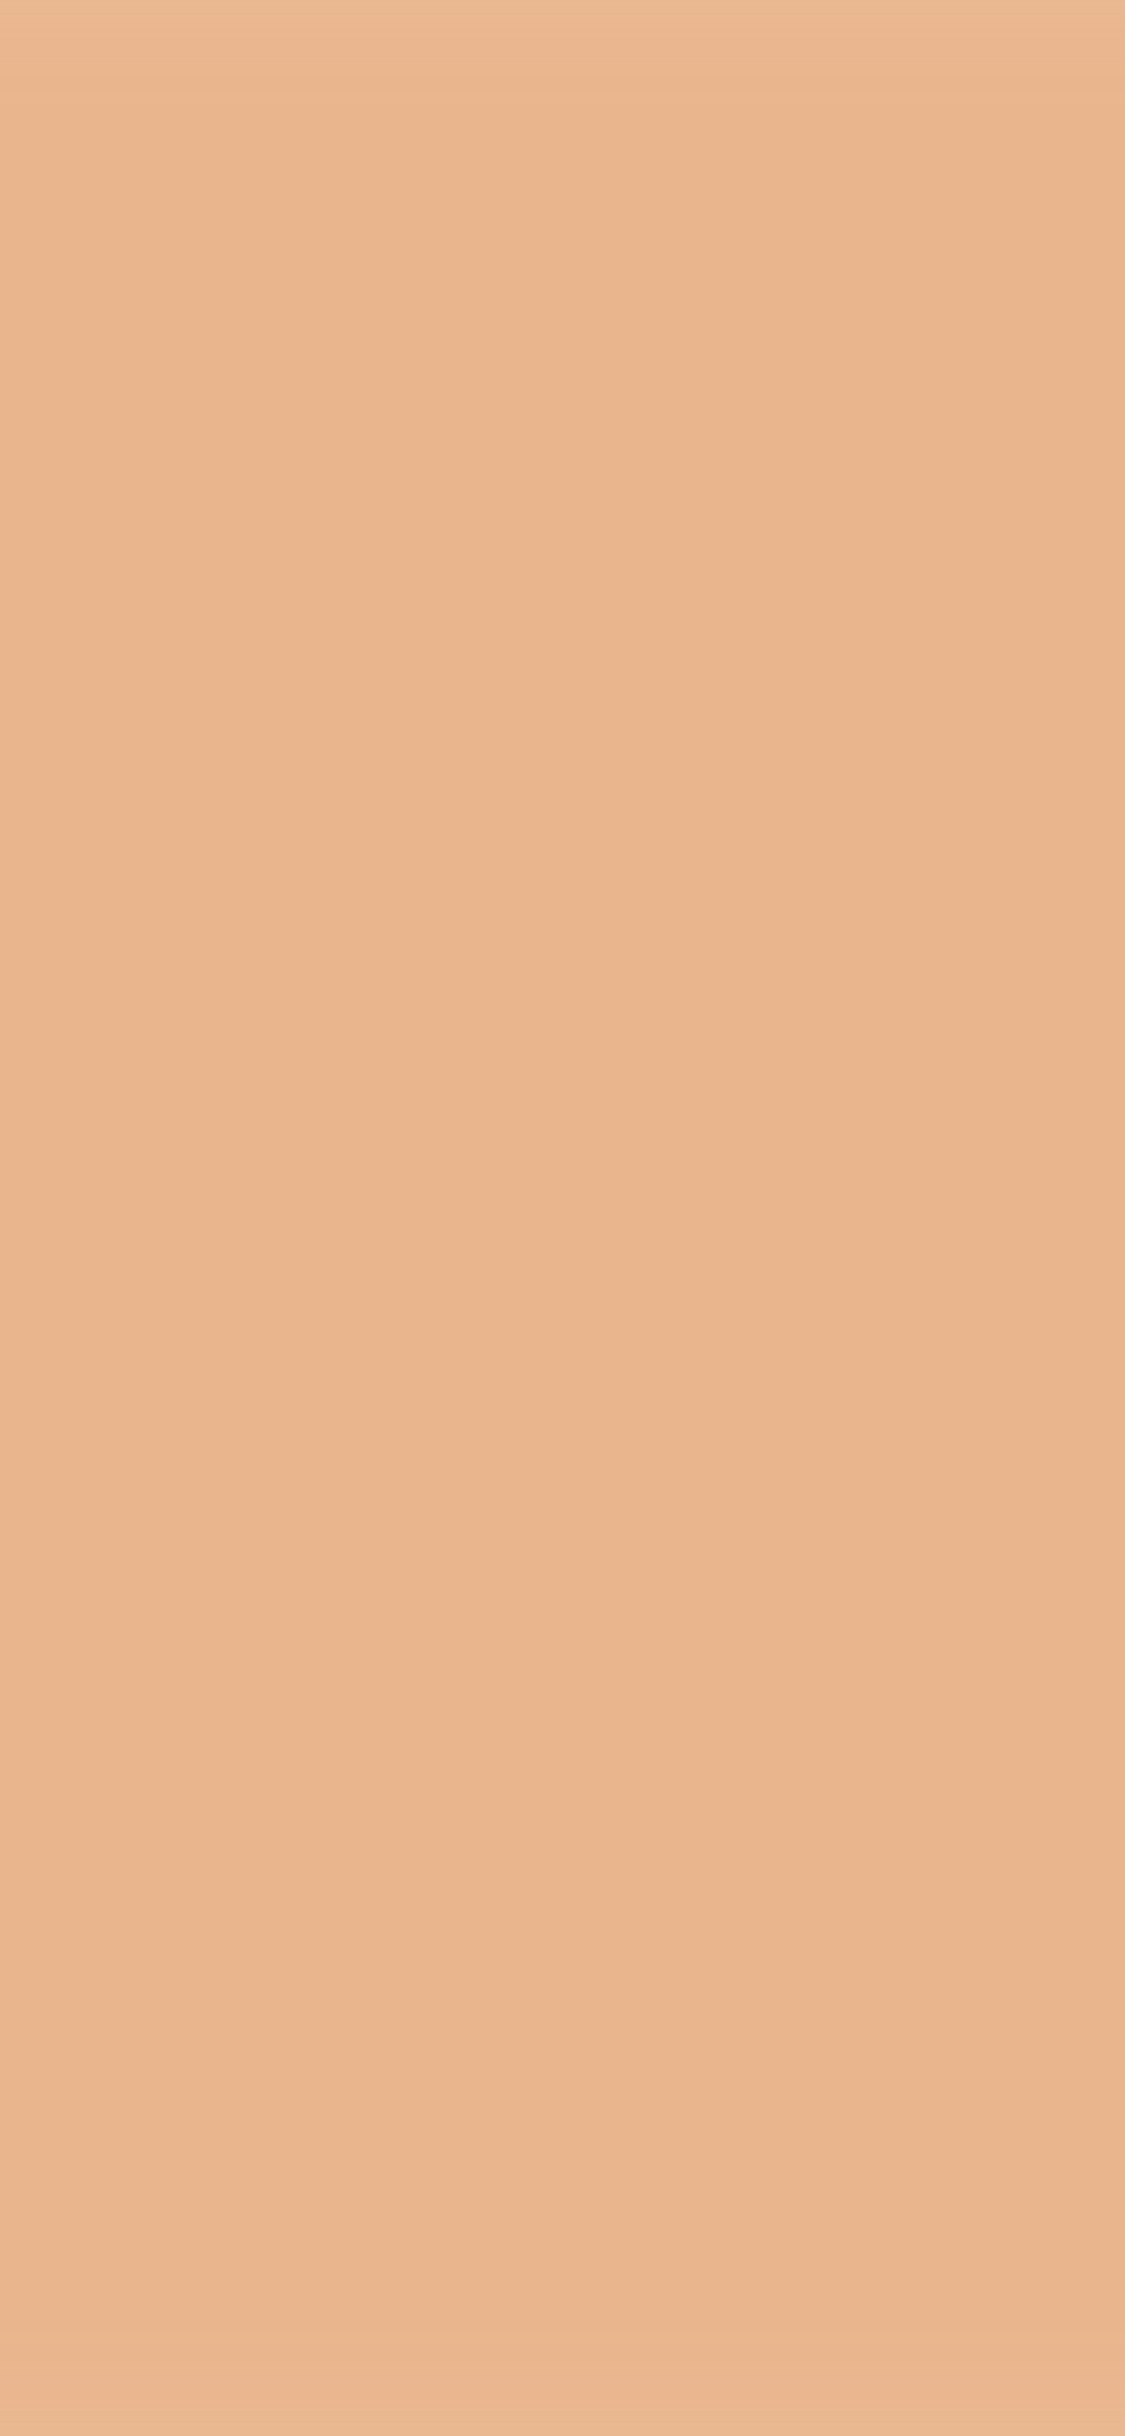 iPhone X wallpaper. flat apricot color blur gradation